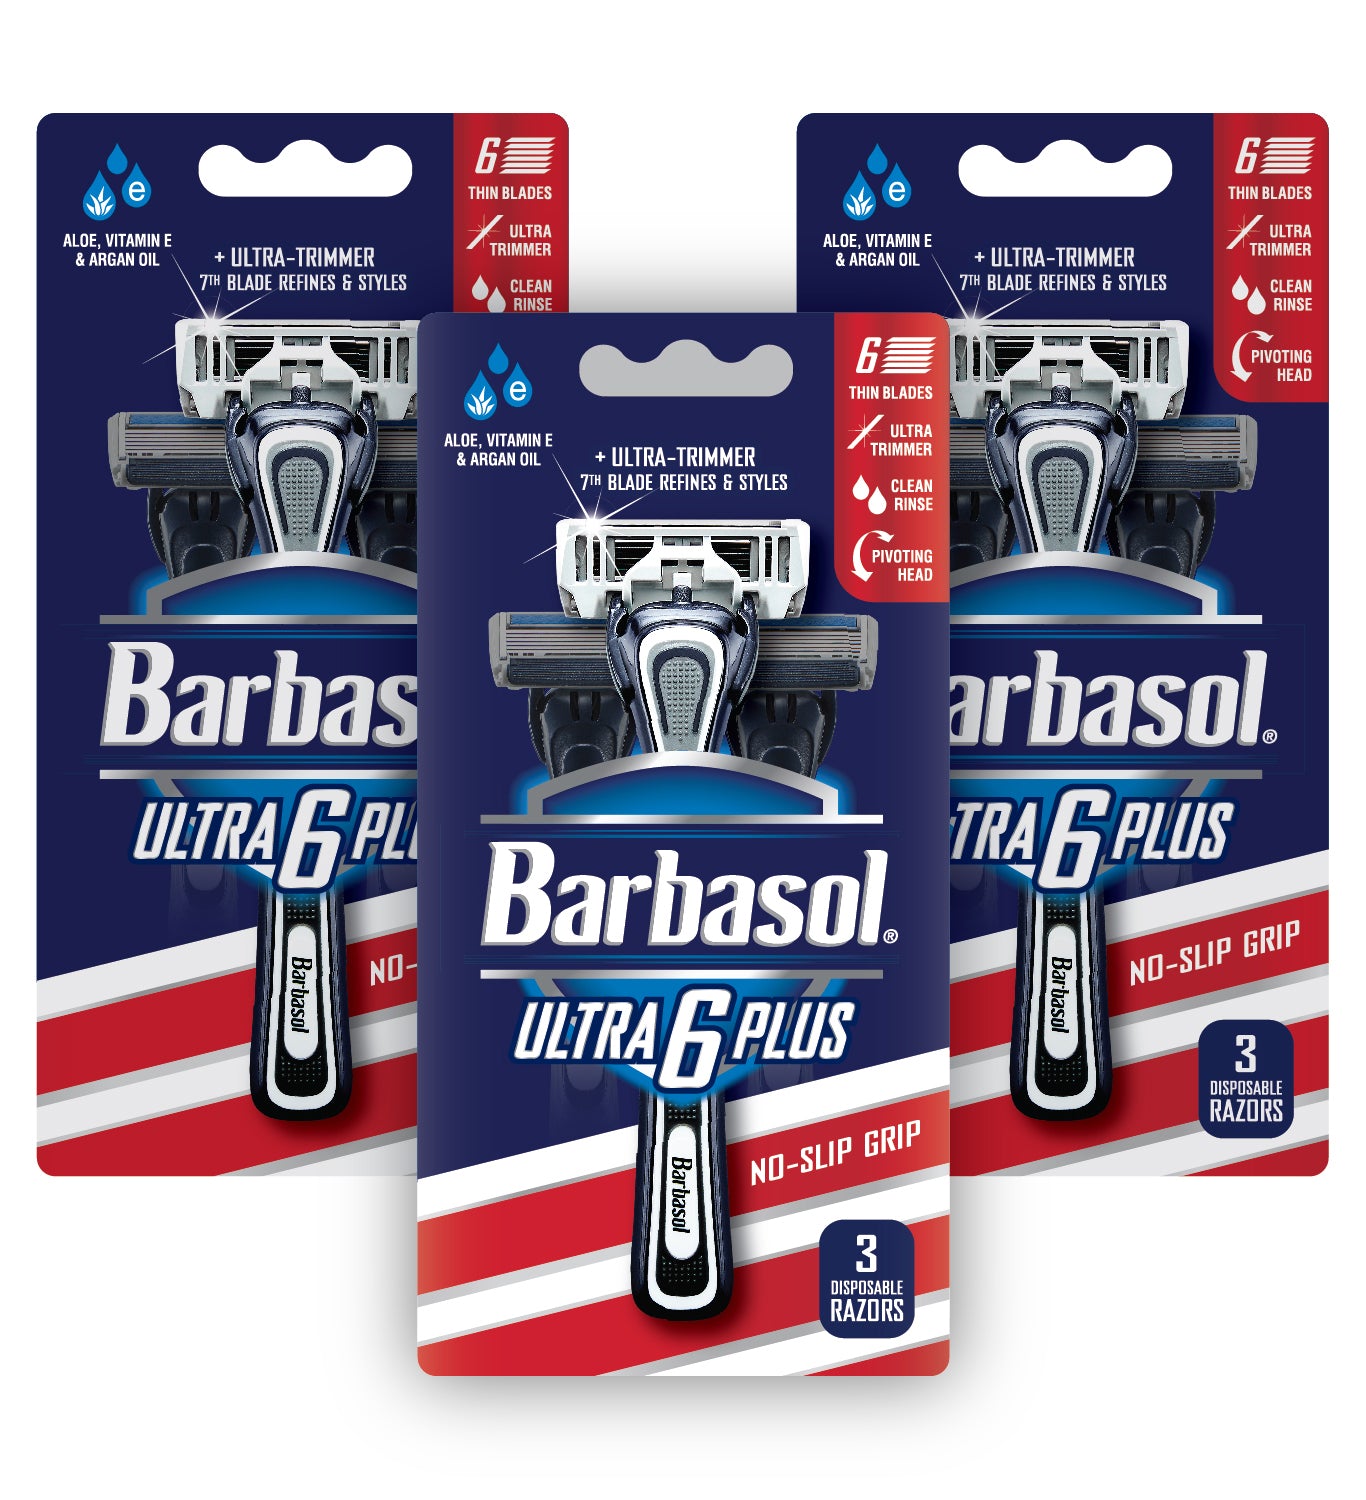 Barbasol Ultra 6 Plus Premium Disposable Razor Value Pack Bundle (3 Packs/9 Total Razors)